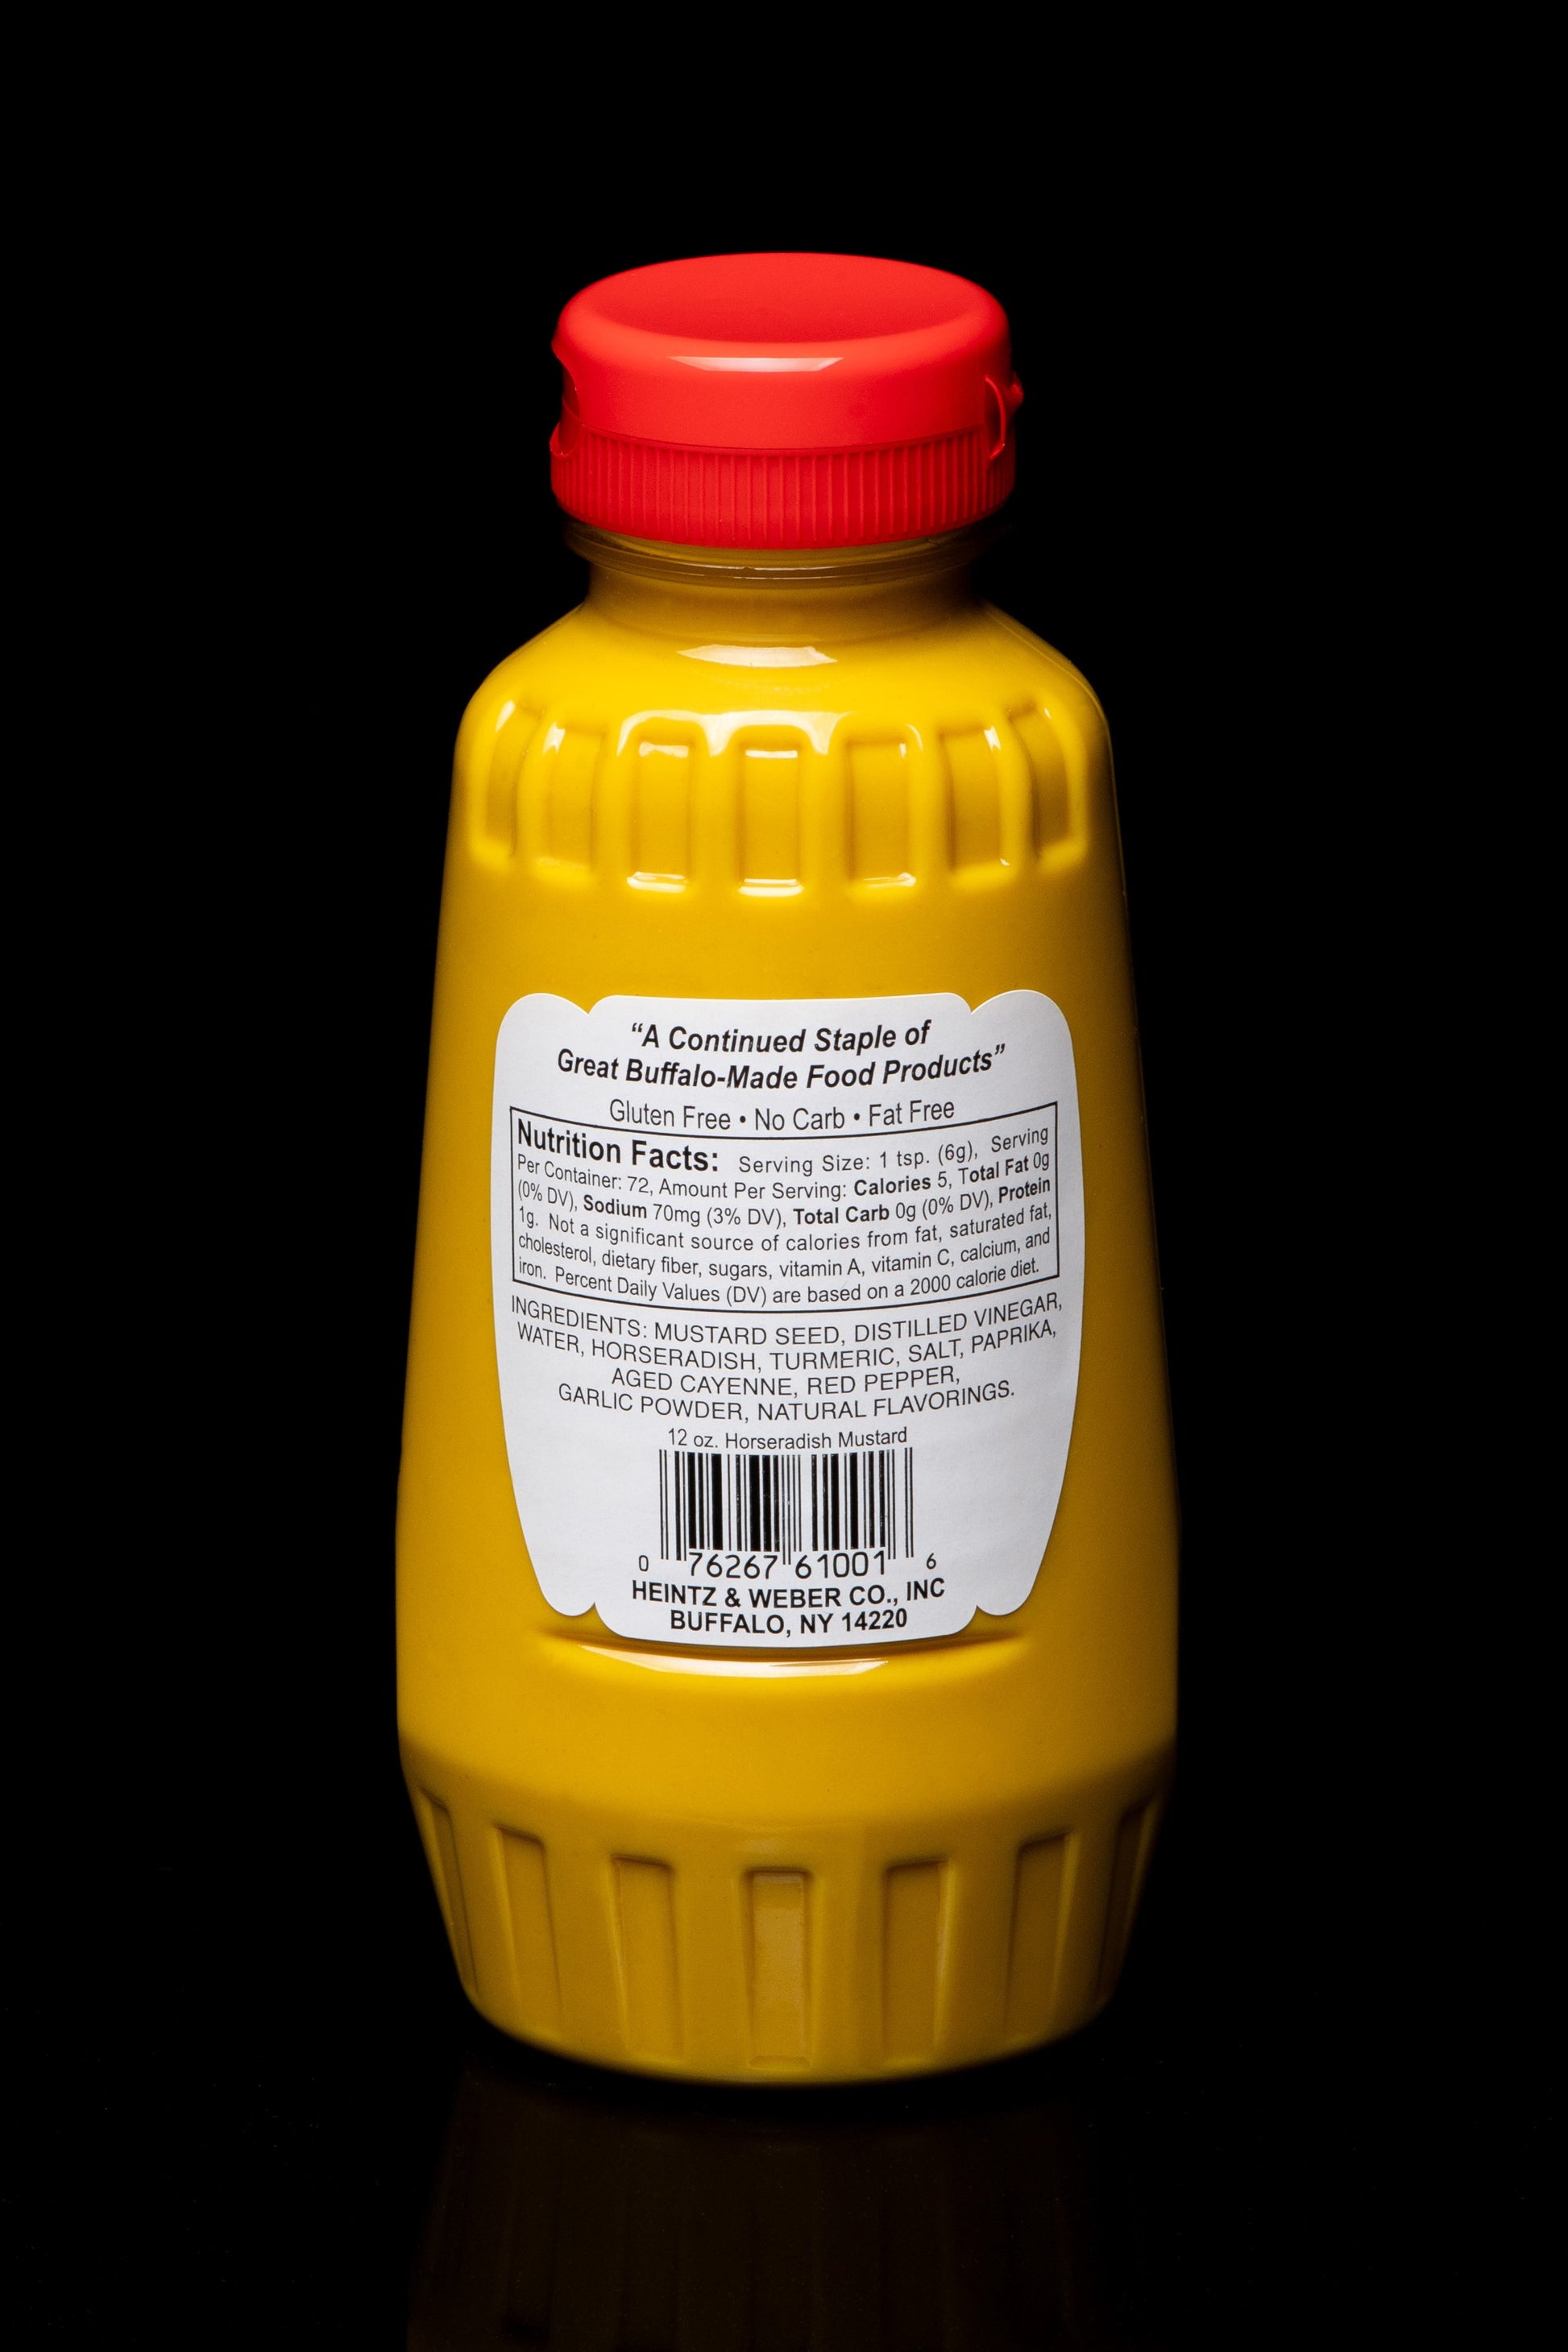 Rear-facing photo of Weber's Brand Squeeze Horseradish Mustard.